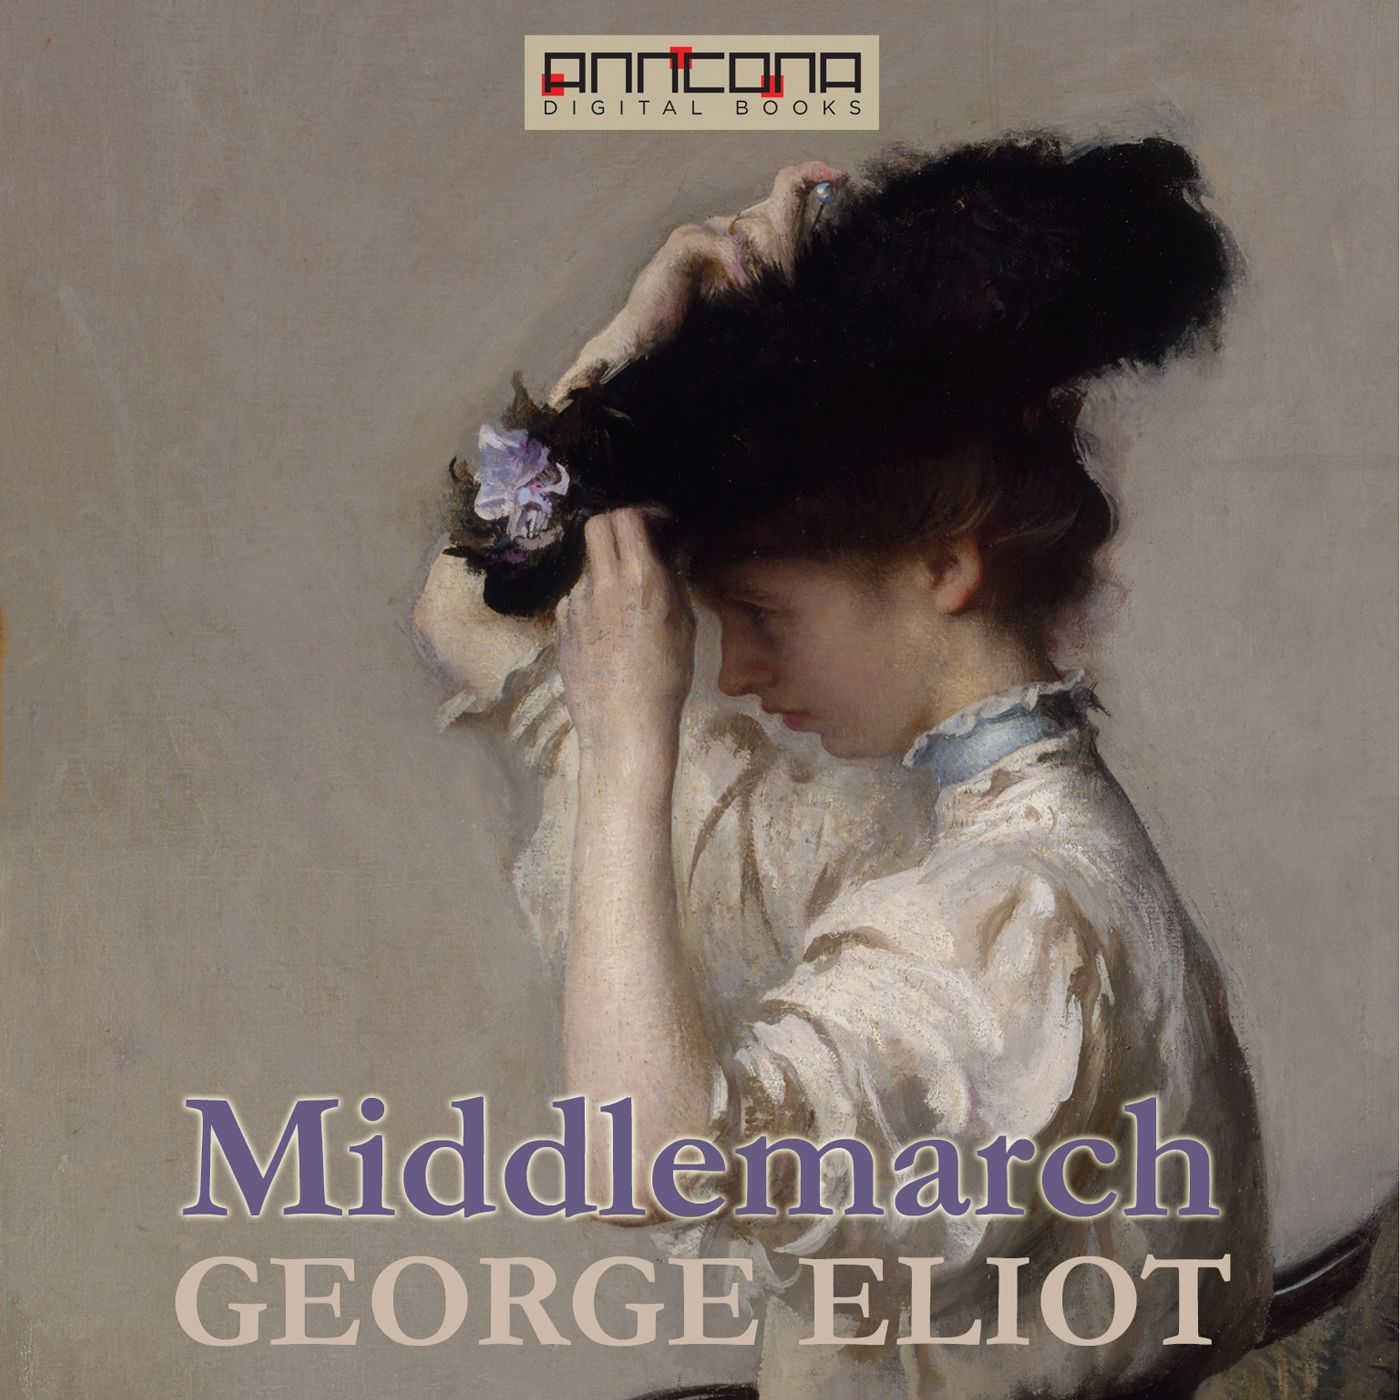 Middlemarch, ljudbok av George Eliot